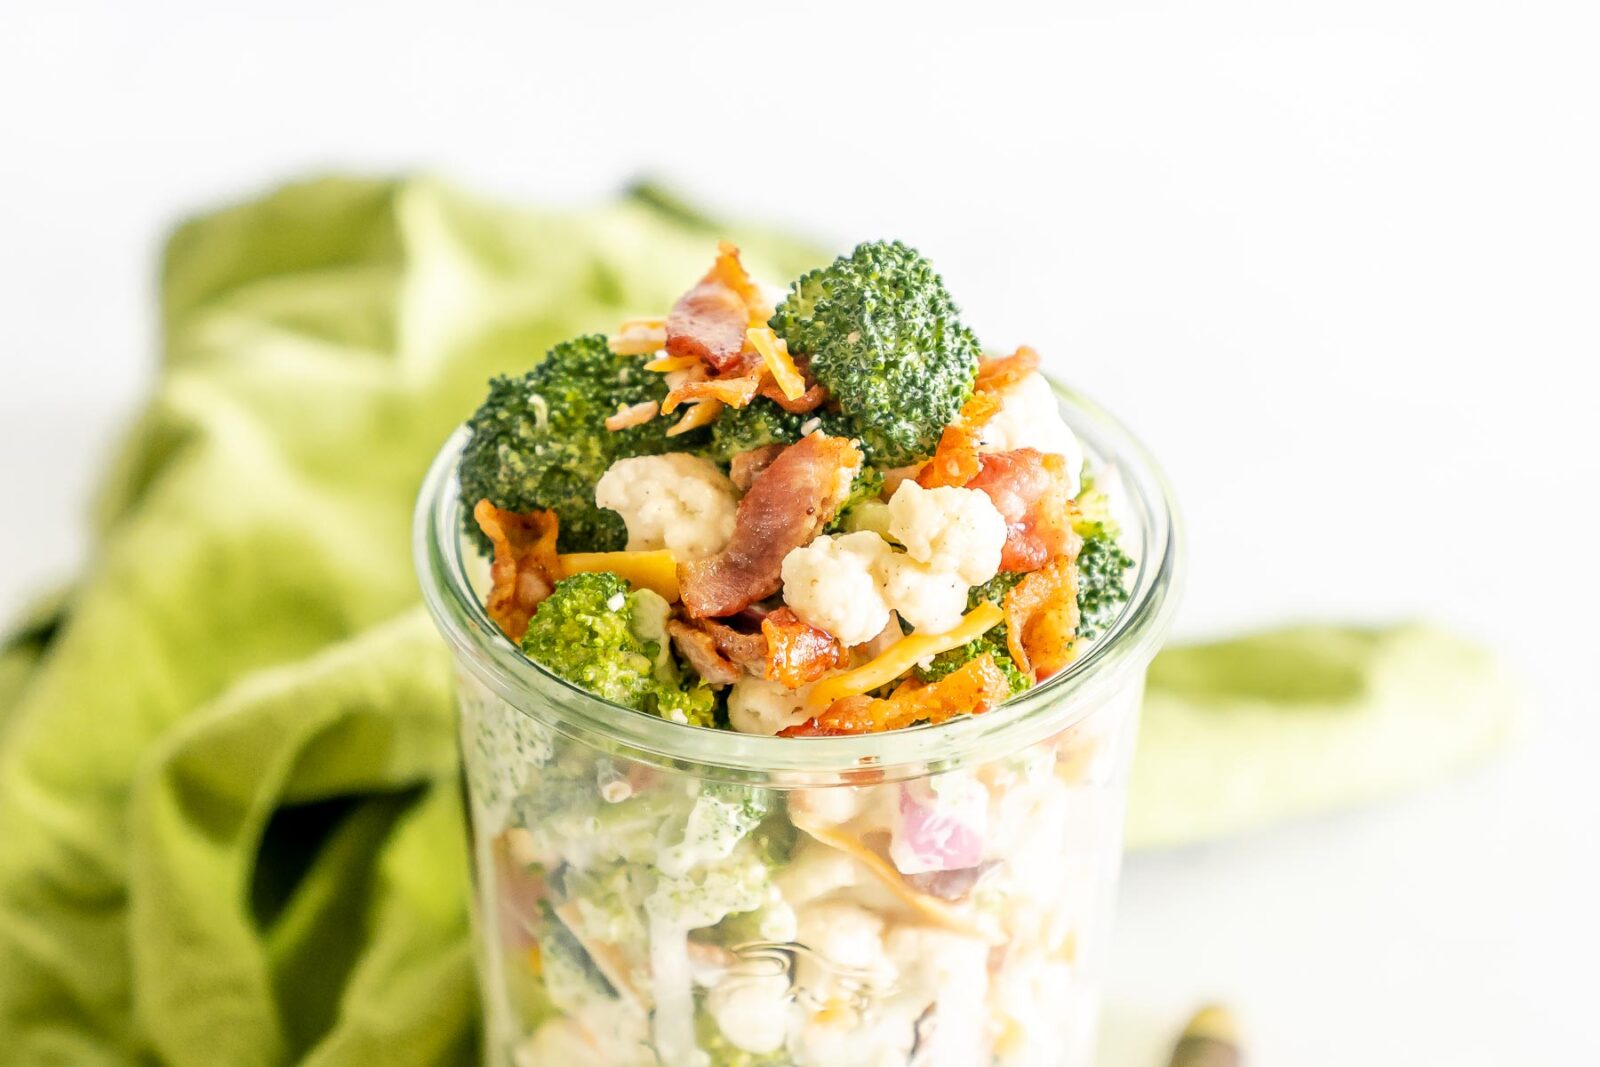 Best Keto Broccoli Salad Recipe